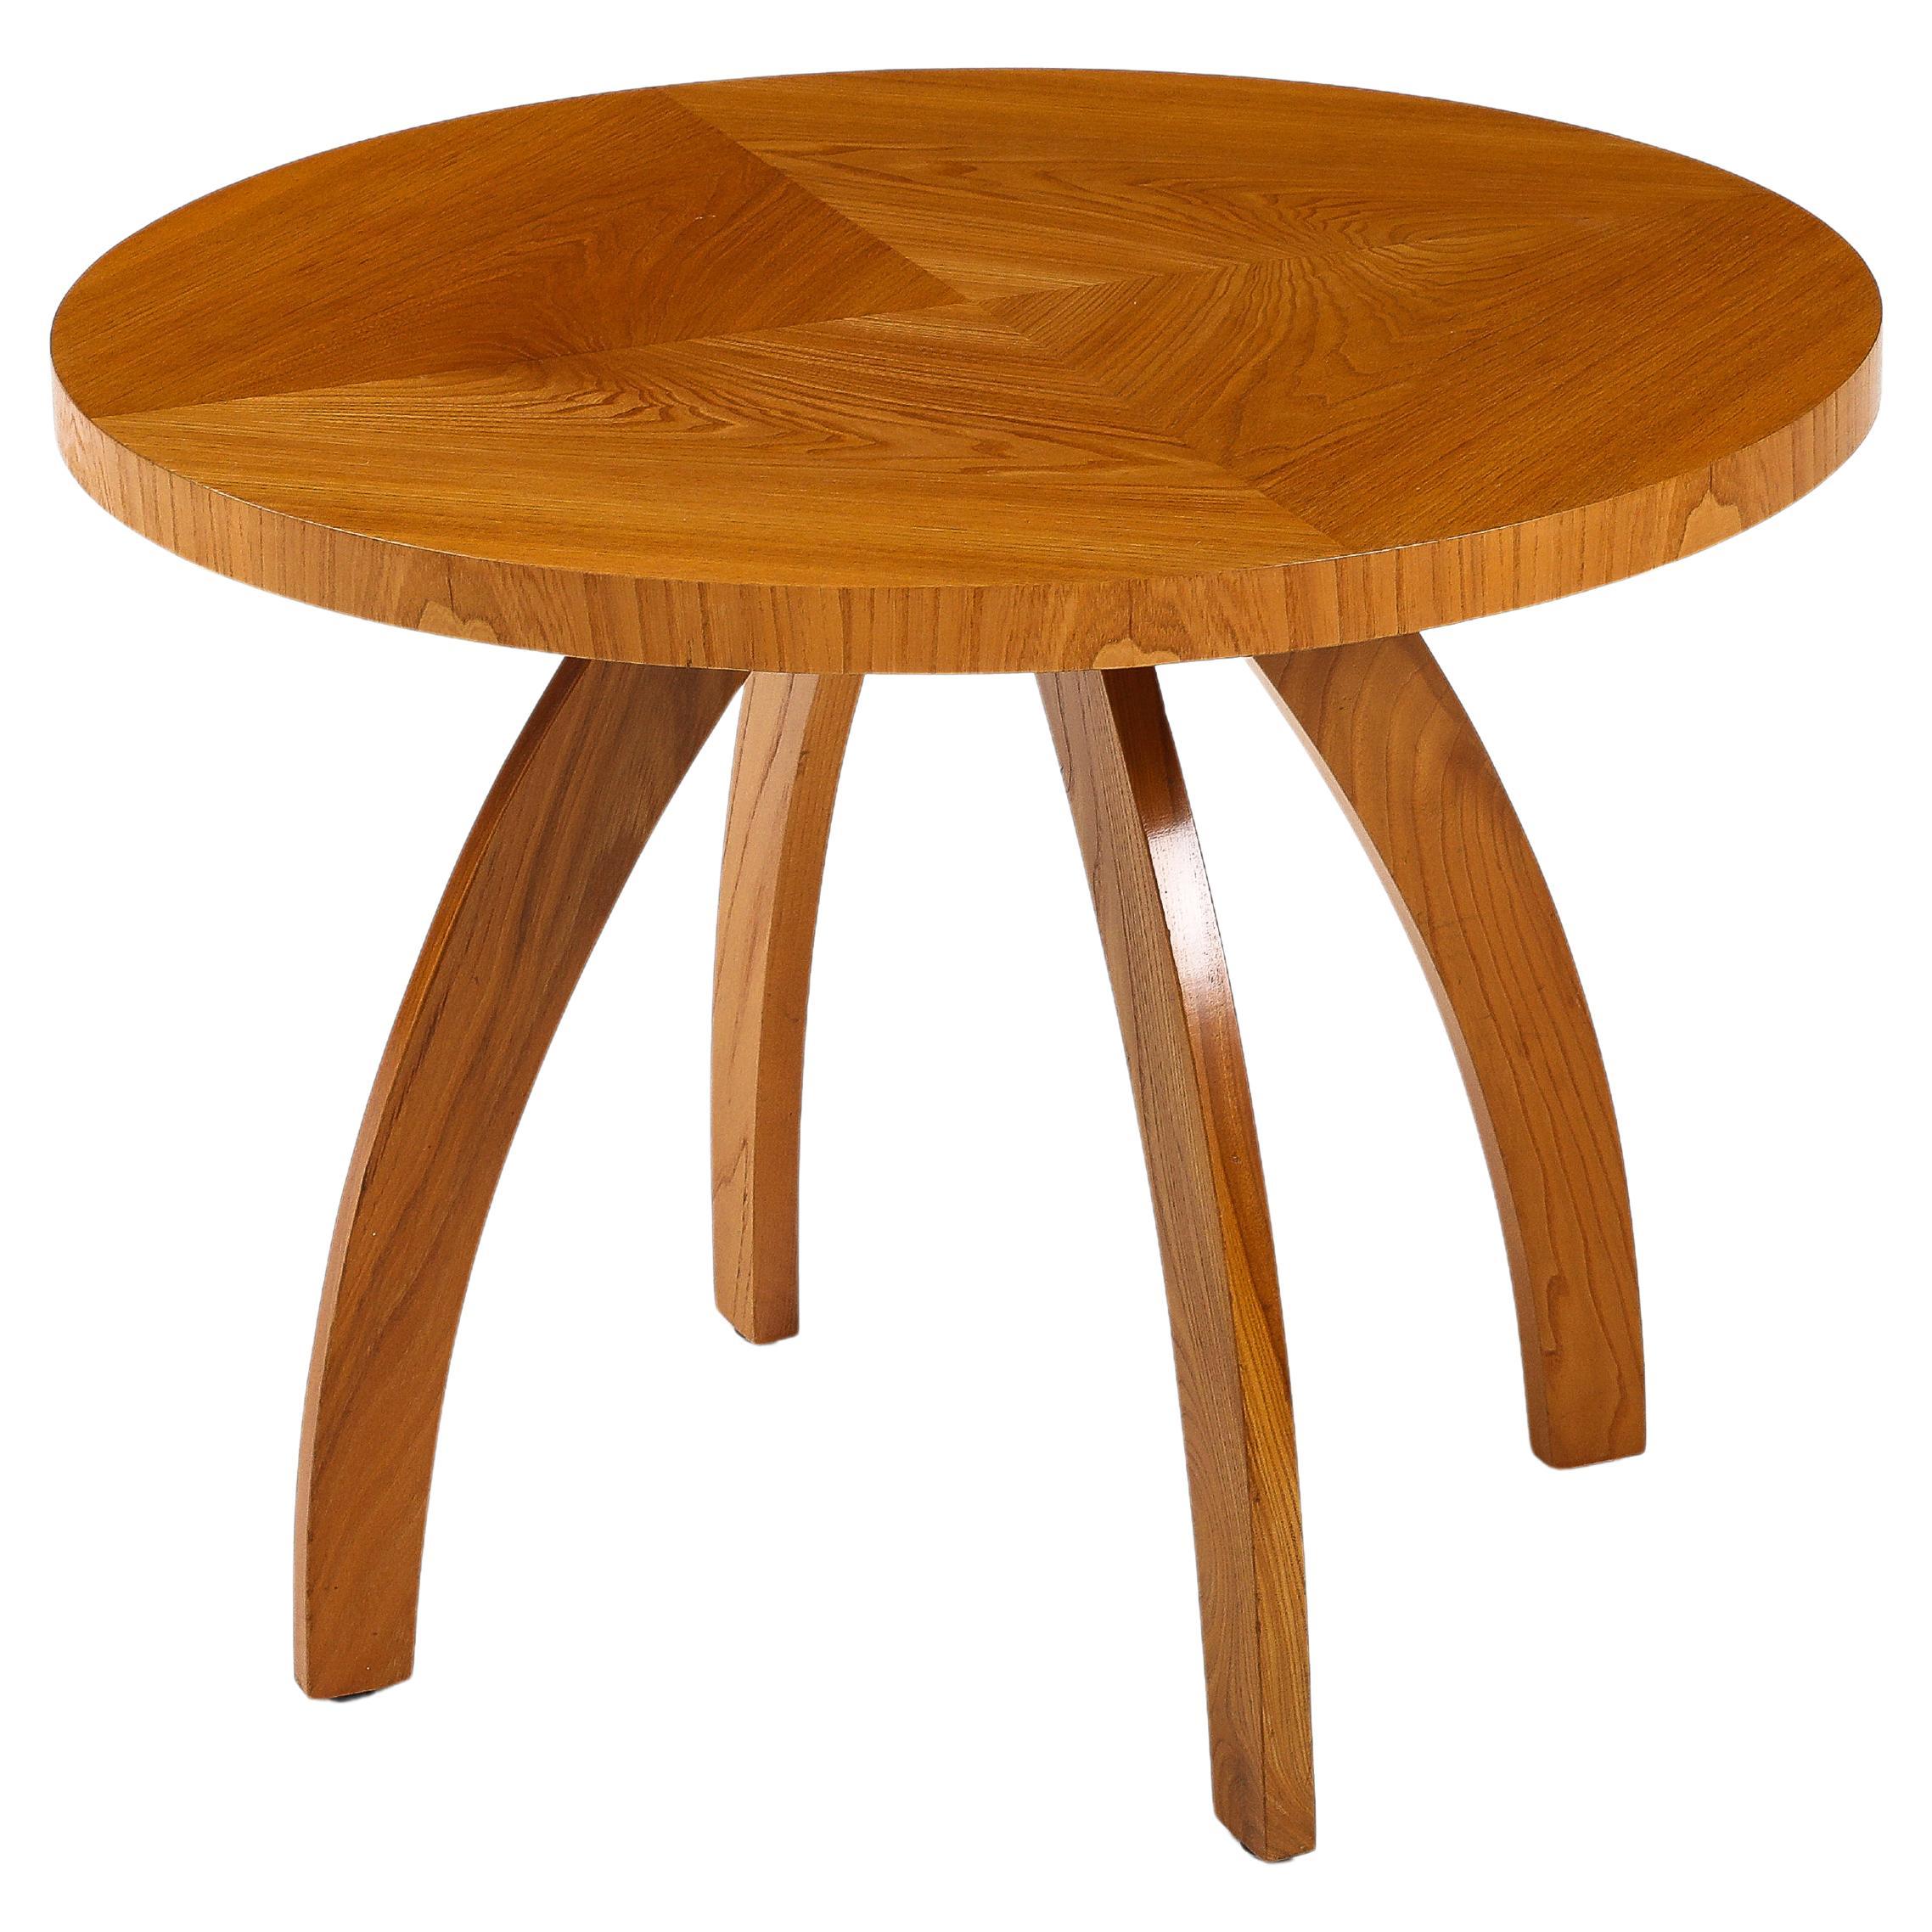 A Swedish Modern Elmwood Side Table, Circa 1940s For Sale